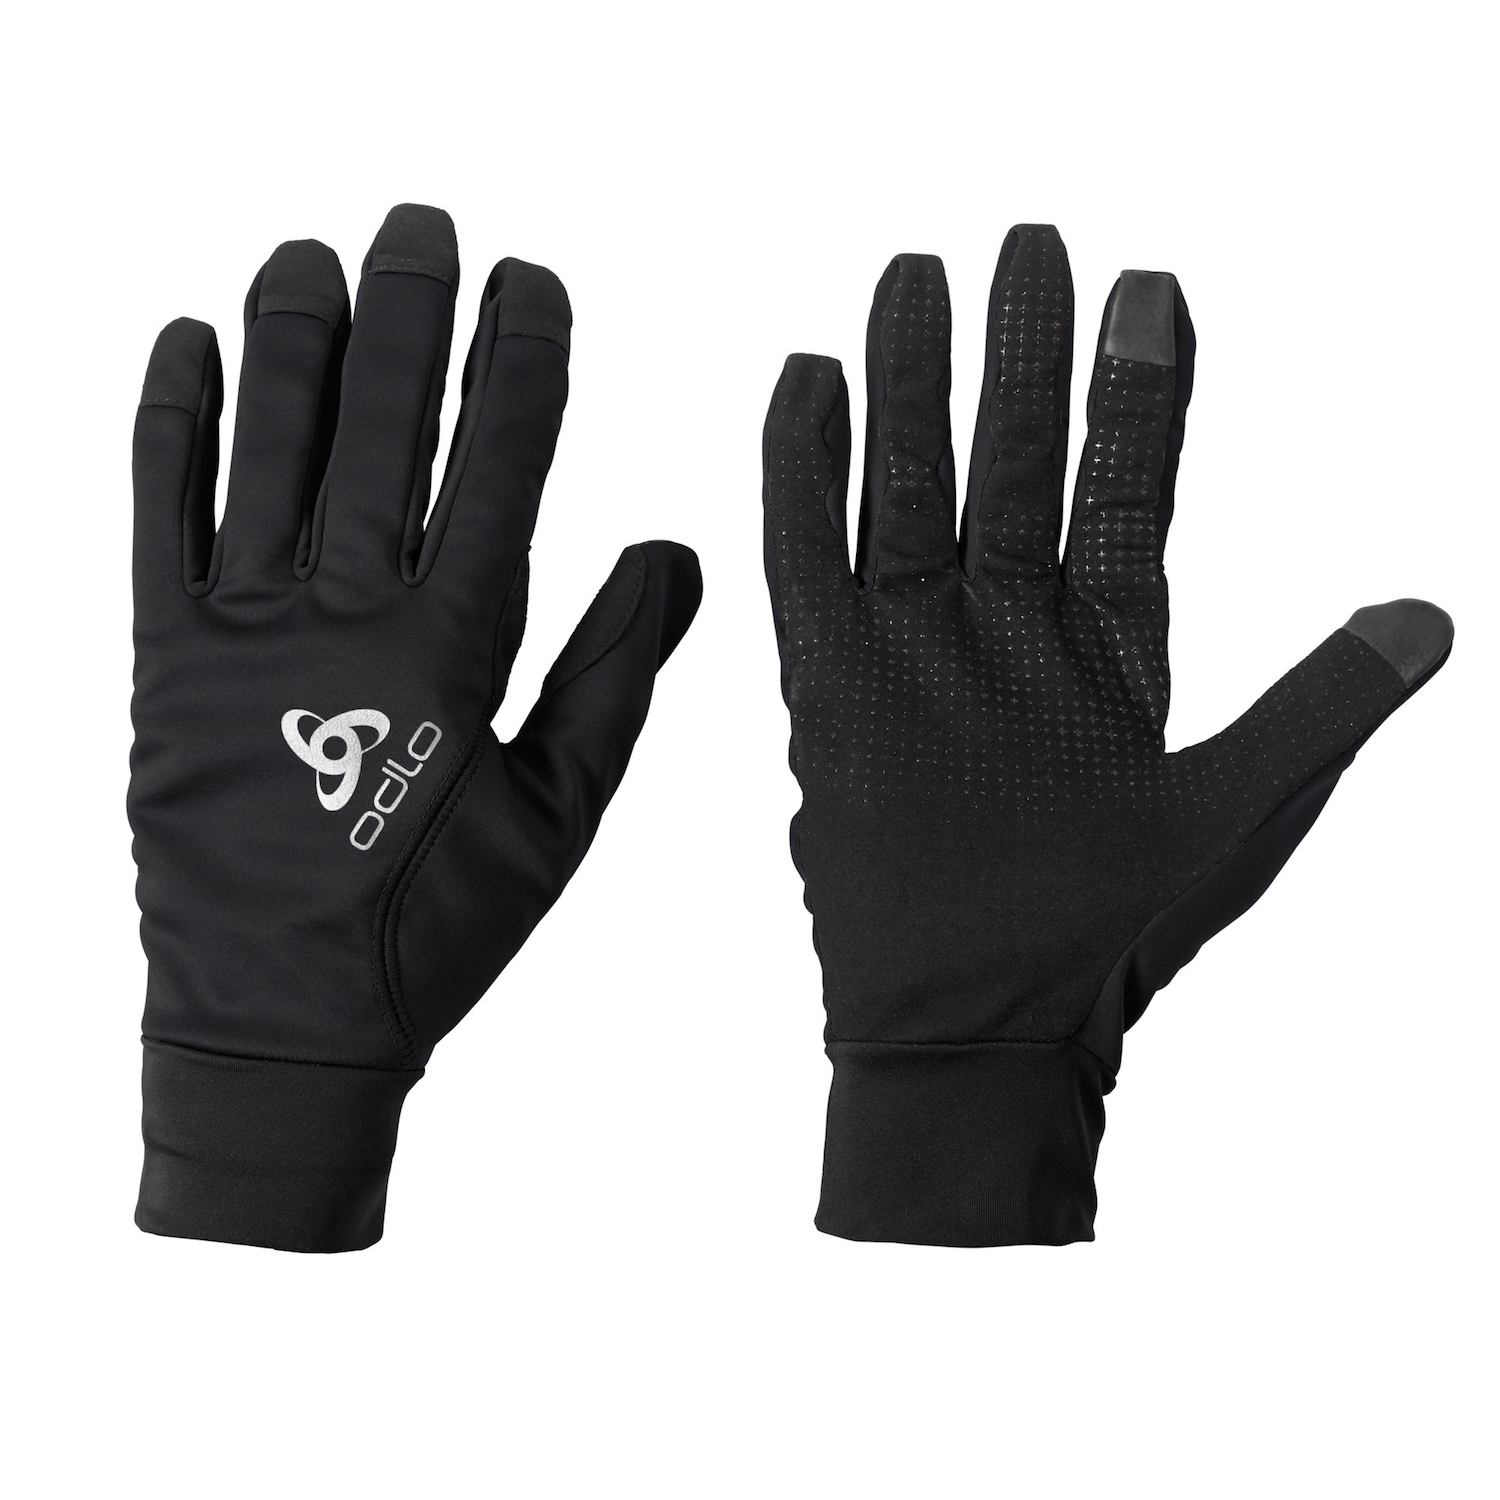 ODLO Zeroweight Warm Gloves Unisex - L